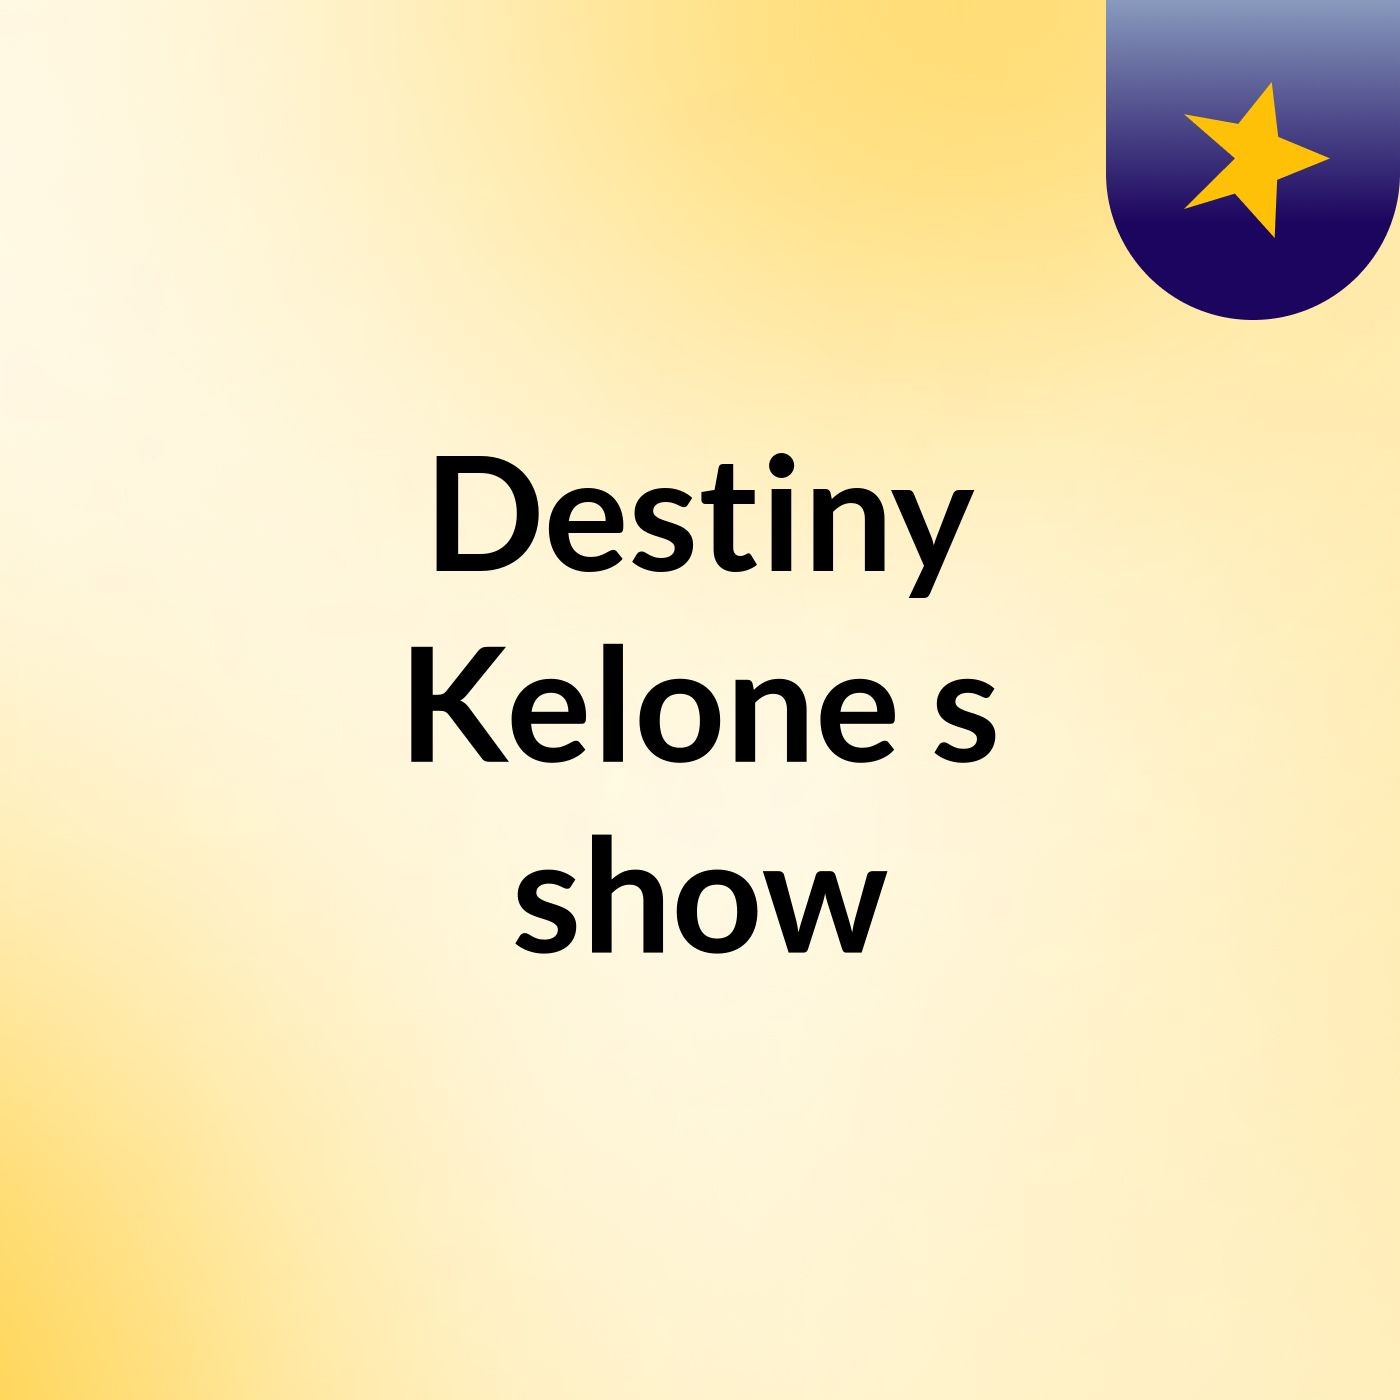 Destiny Kelone's show